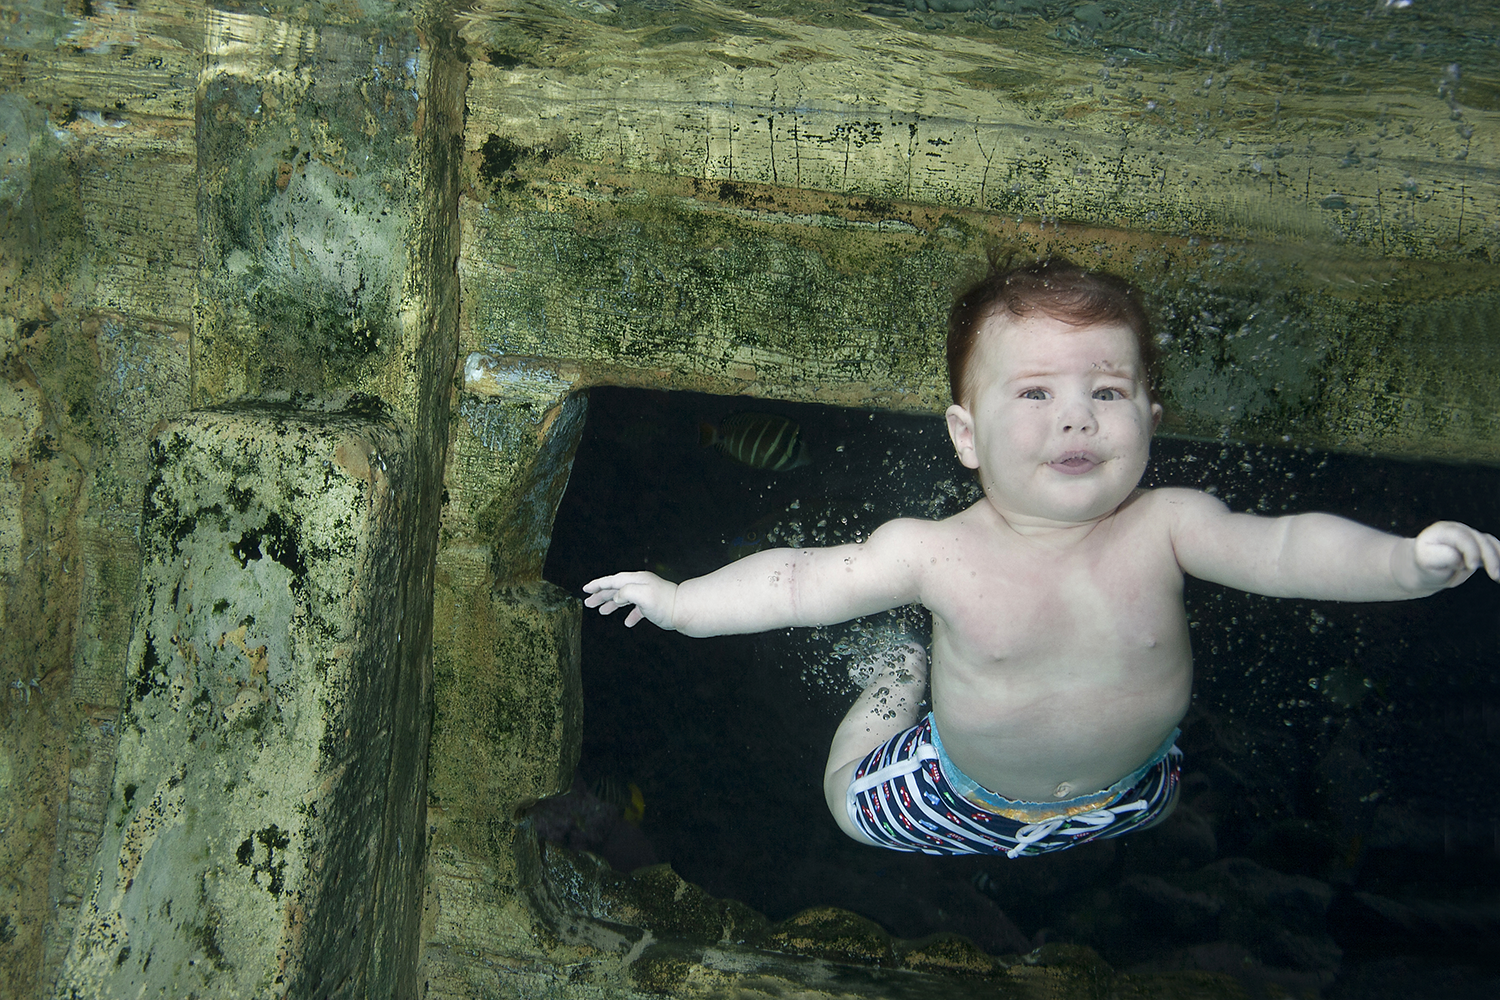 underwater baby